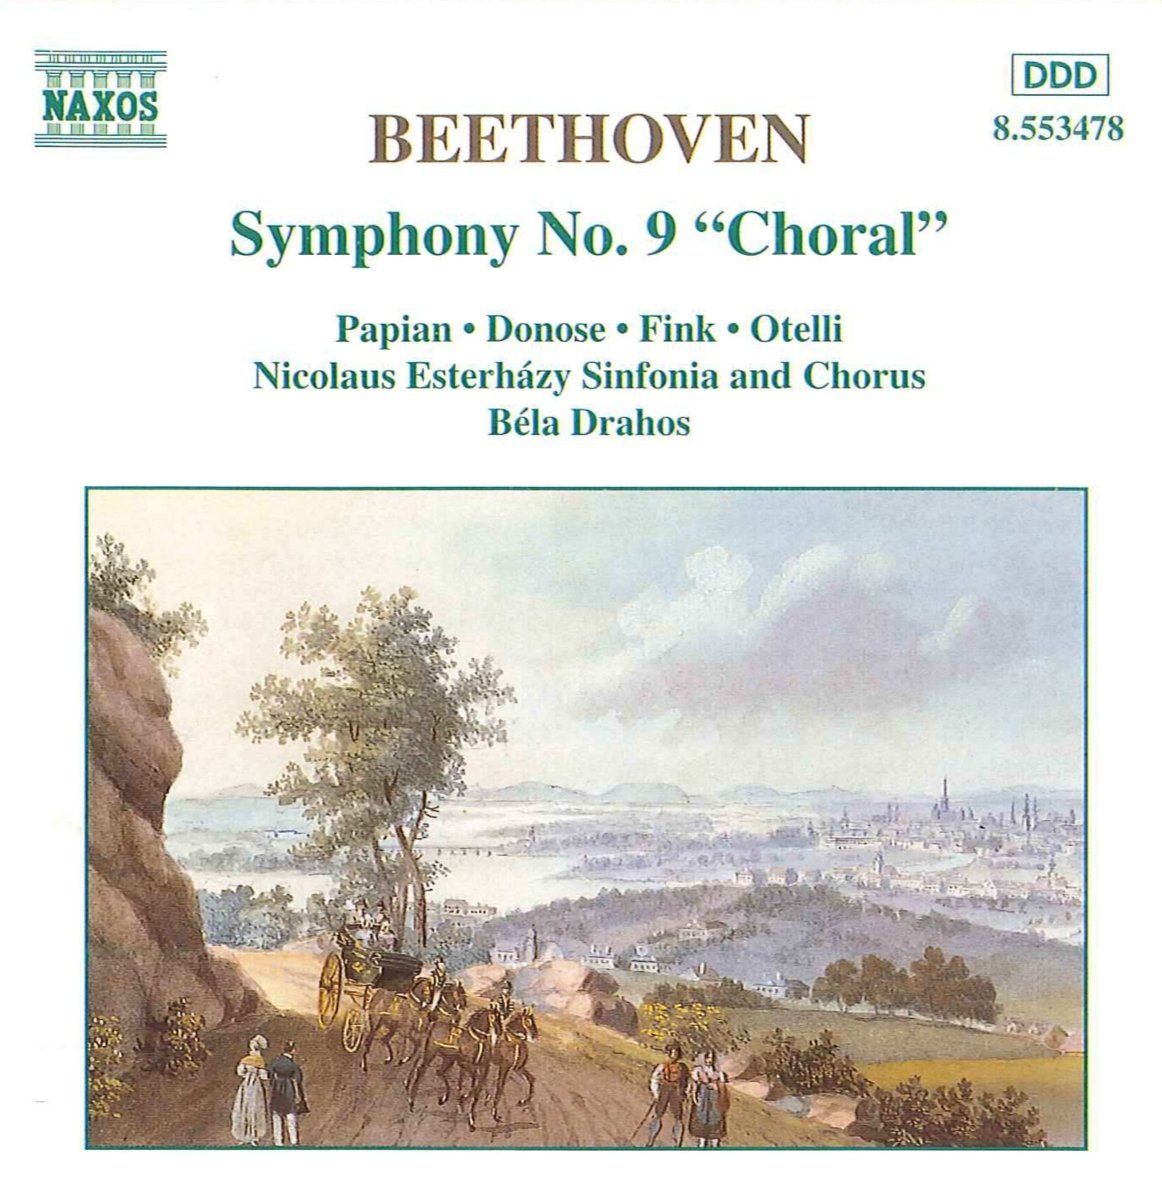 BEETHOVEN LUDWIG VAN – Symphony No. 9